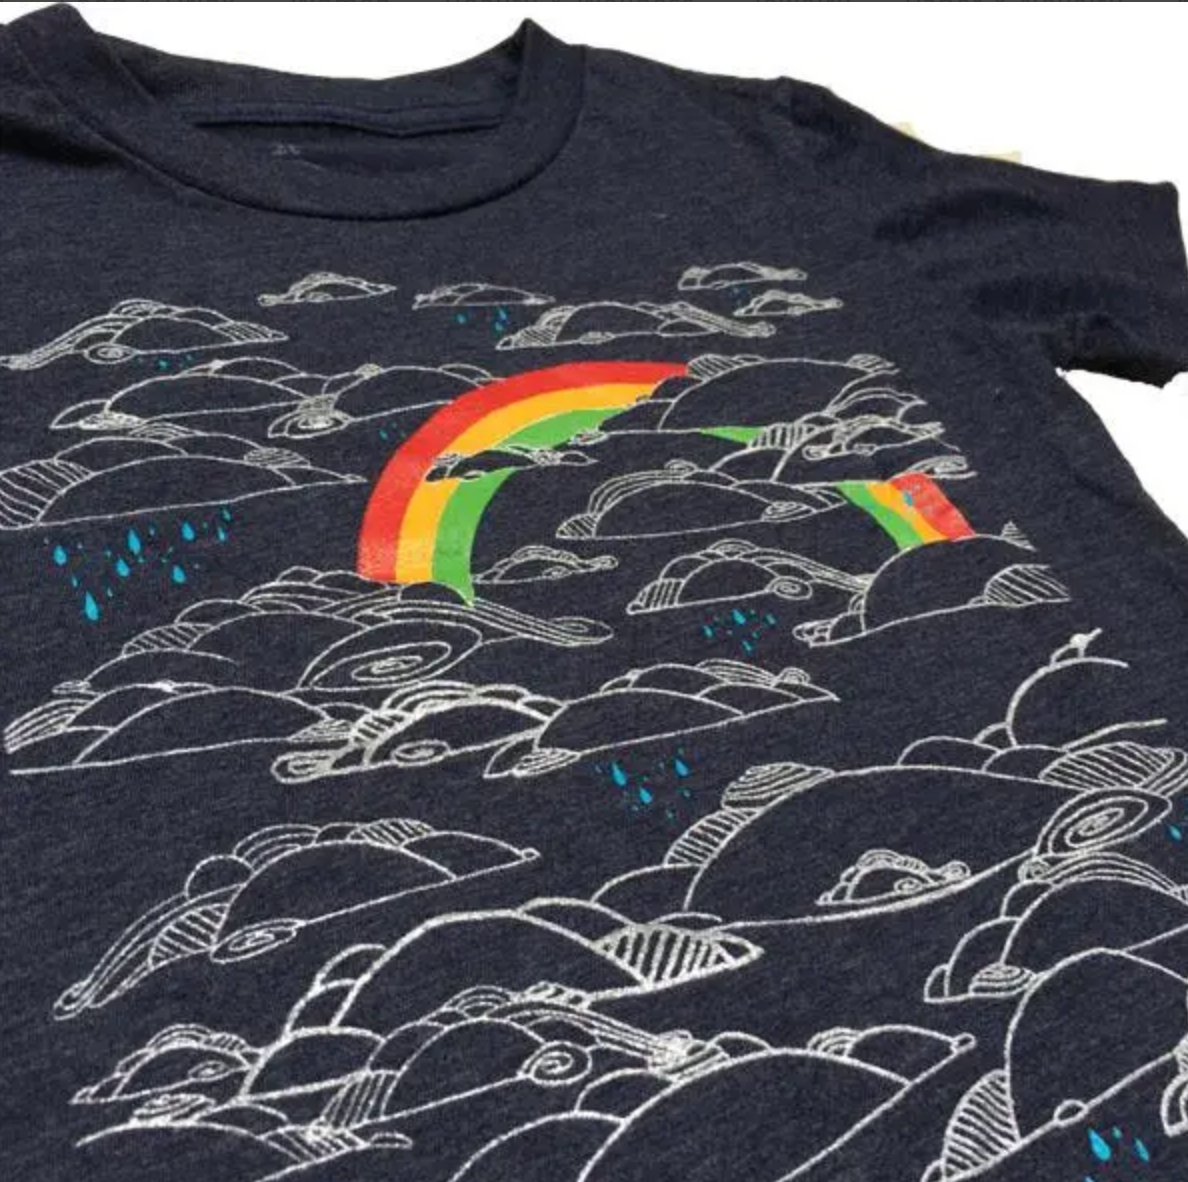 Toddler Shirt - Rainbow - Unisex Crew